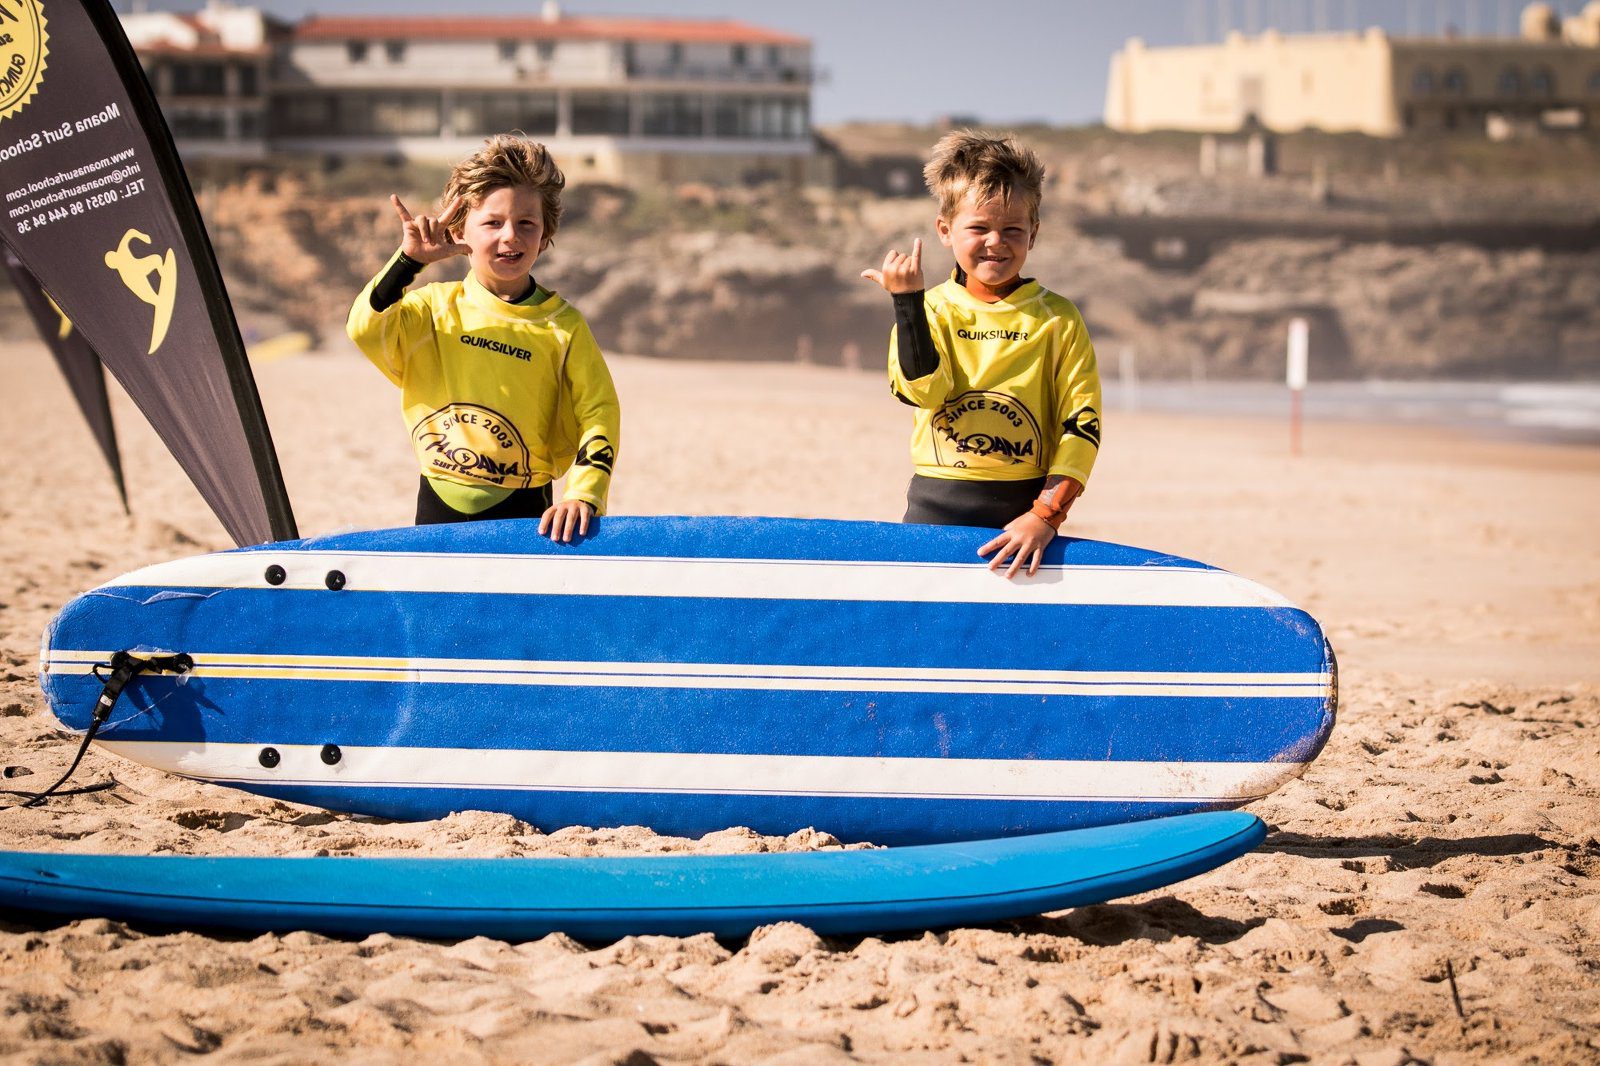 Post Covid surf classes, team building, sun & fun